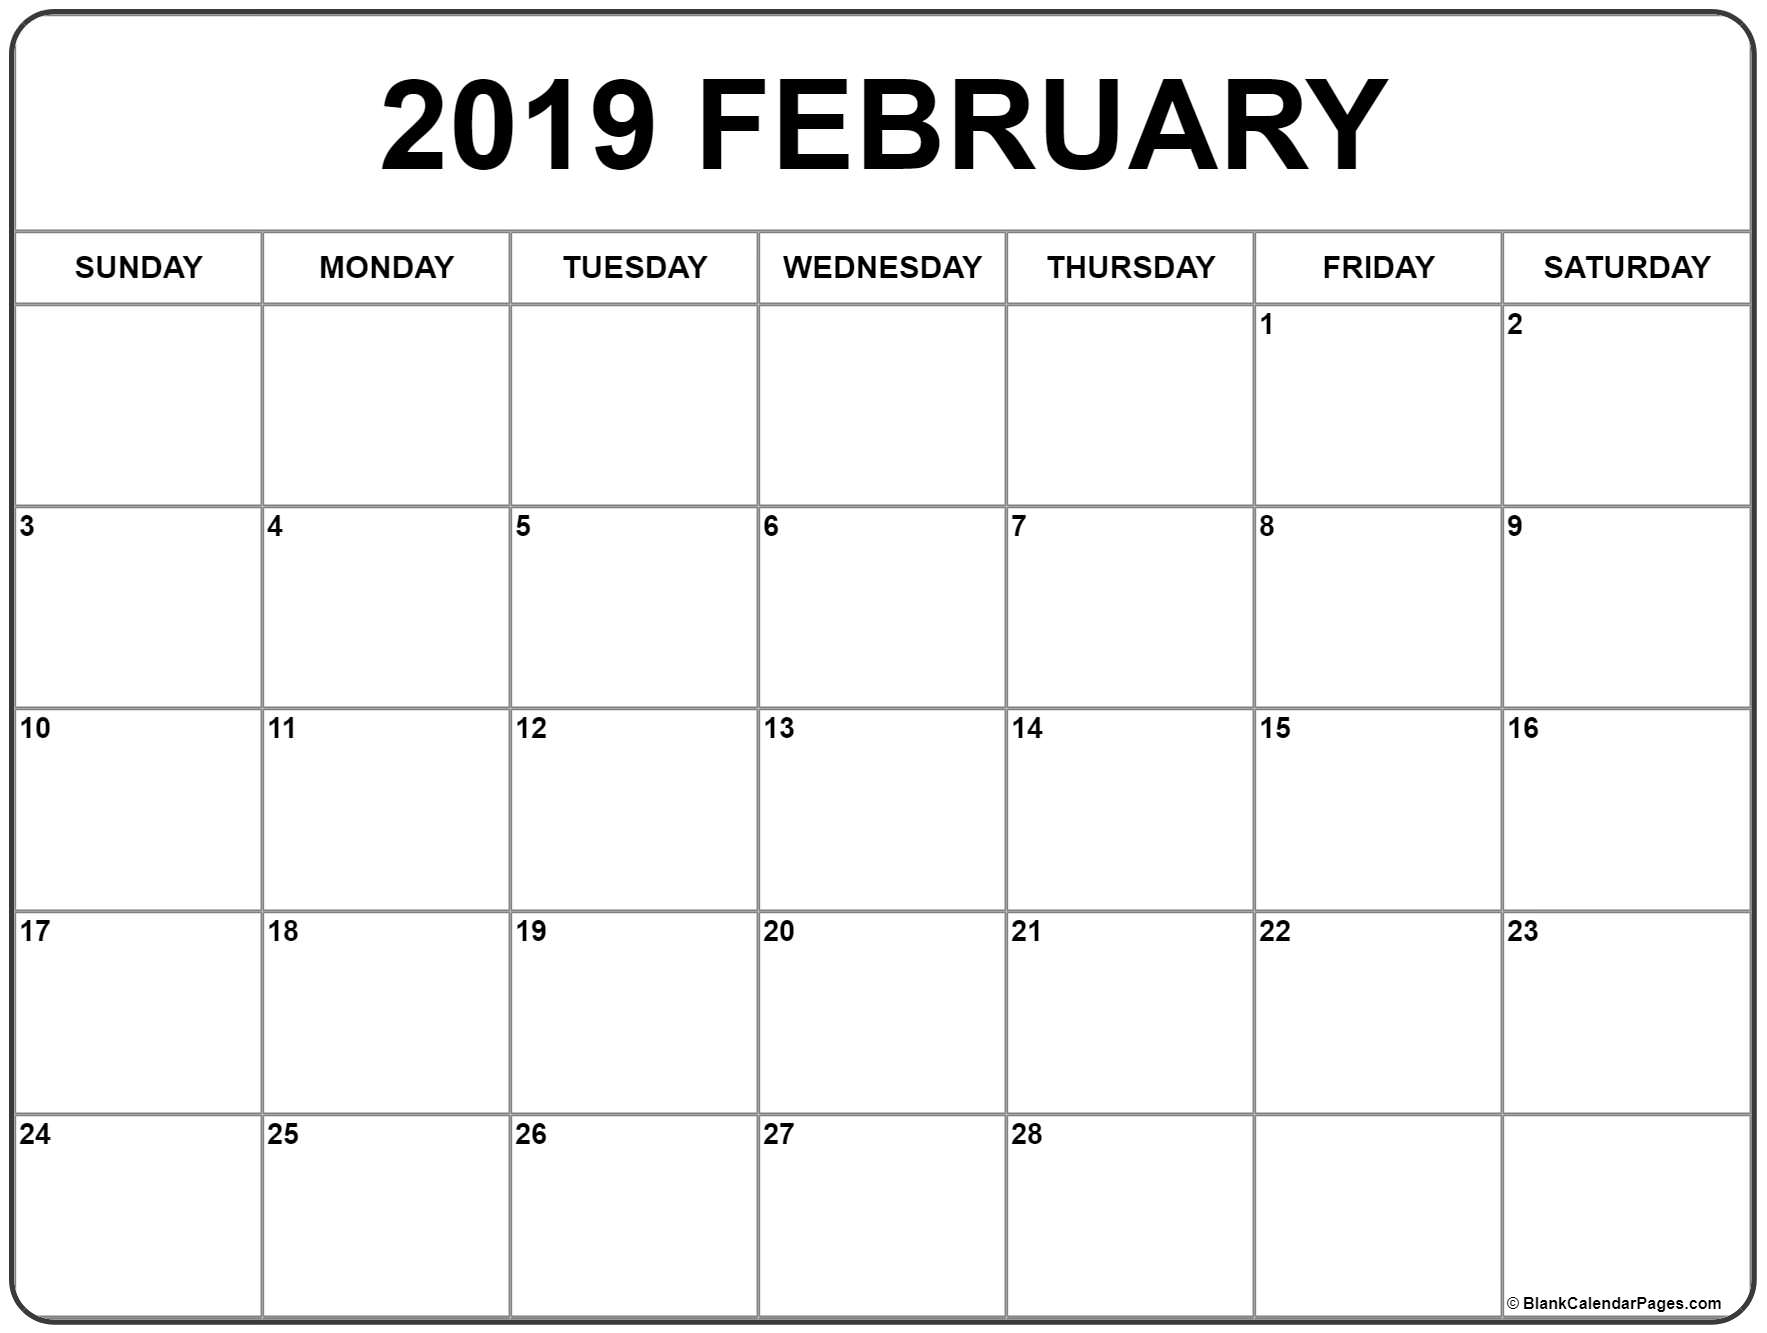 February Blank Calendar 2019 Printable